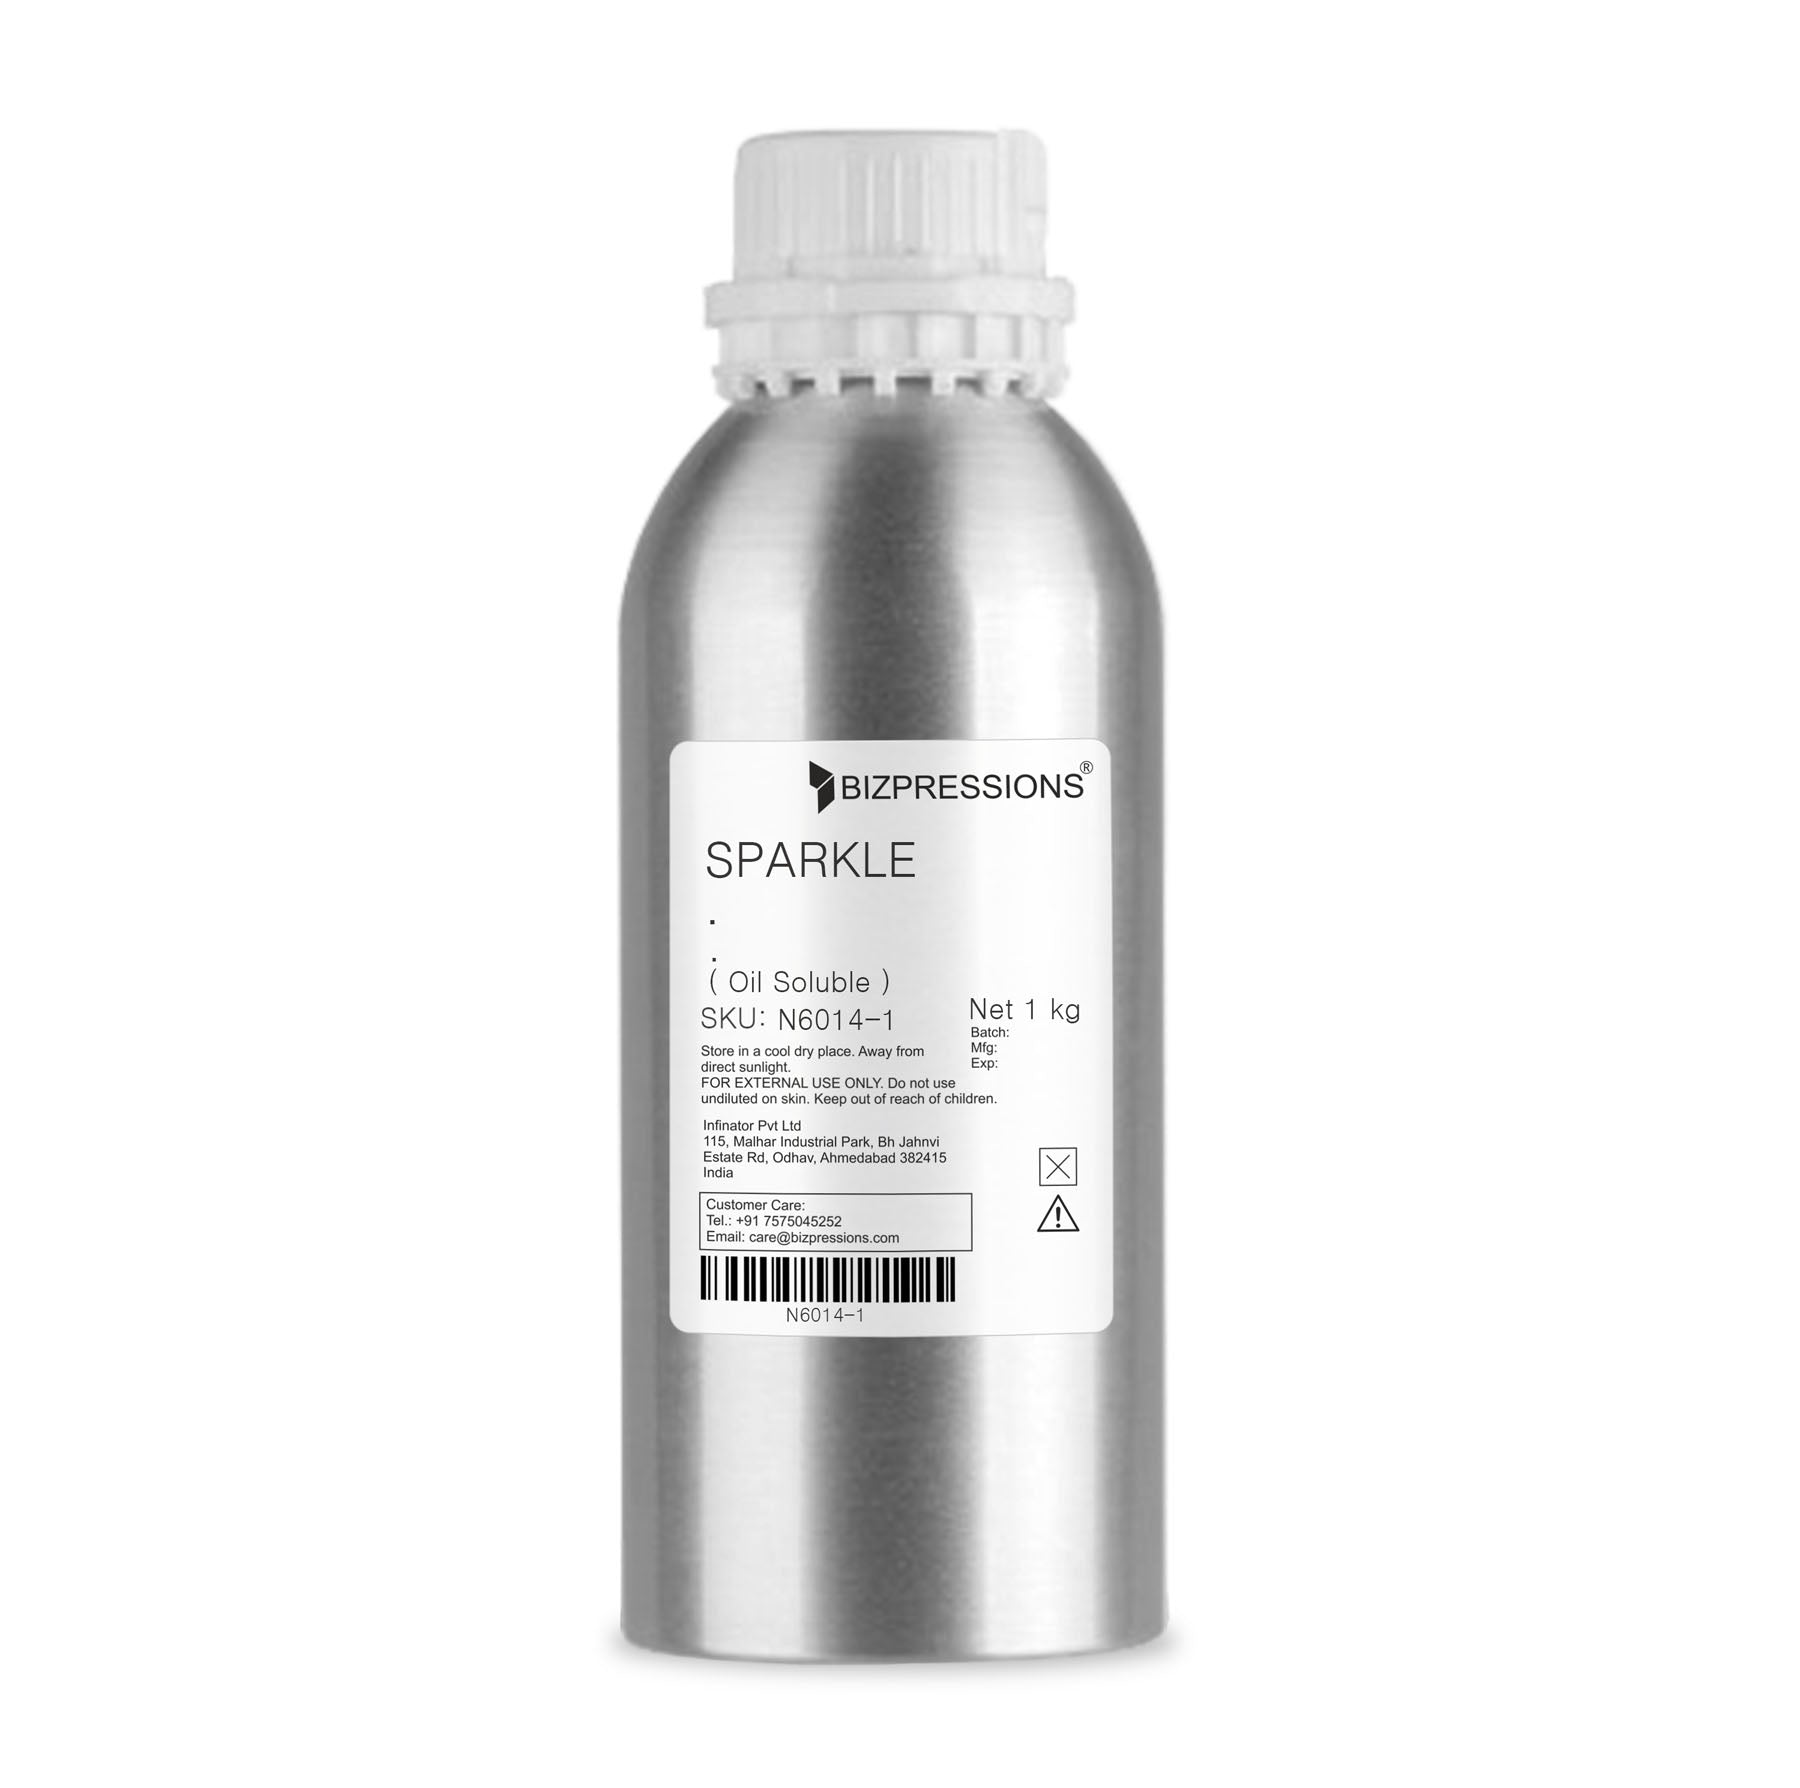 SPARKLE - Fragrance ( Oil Soluble ) - 1 kg